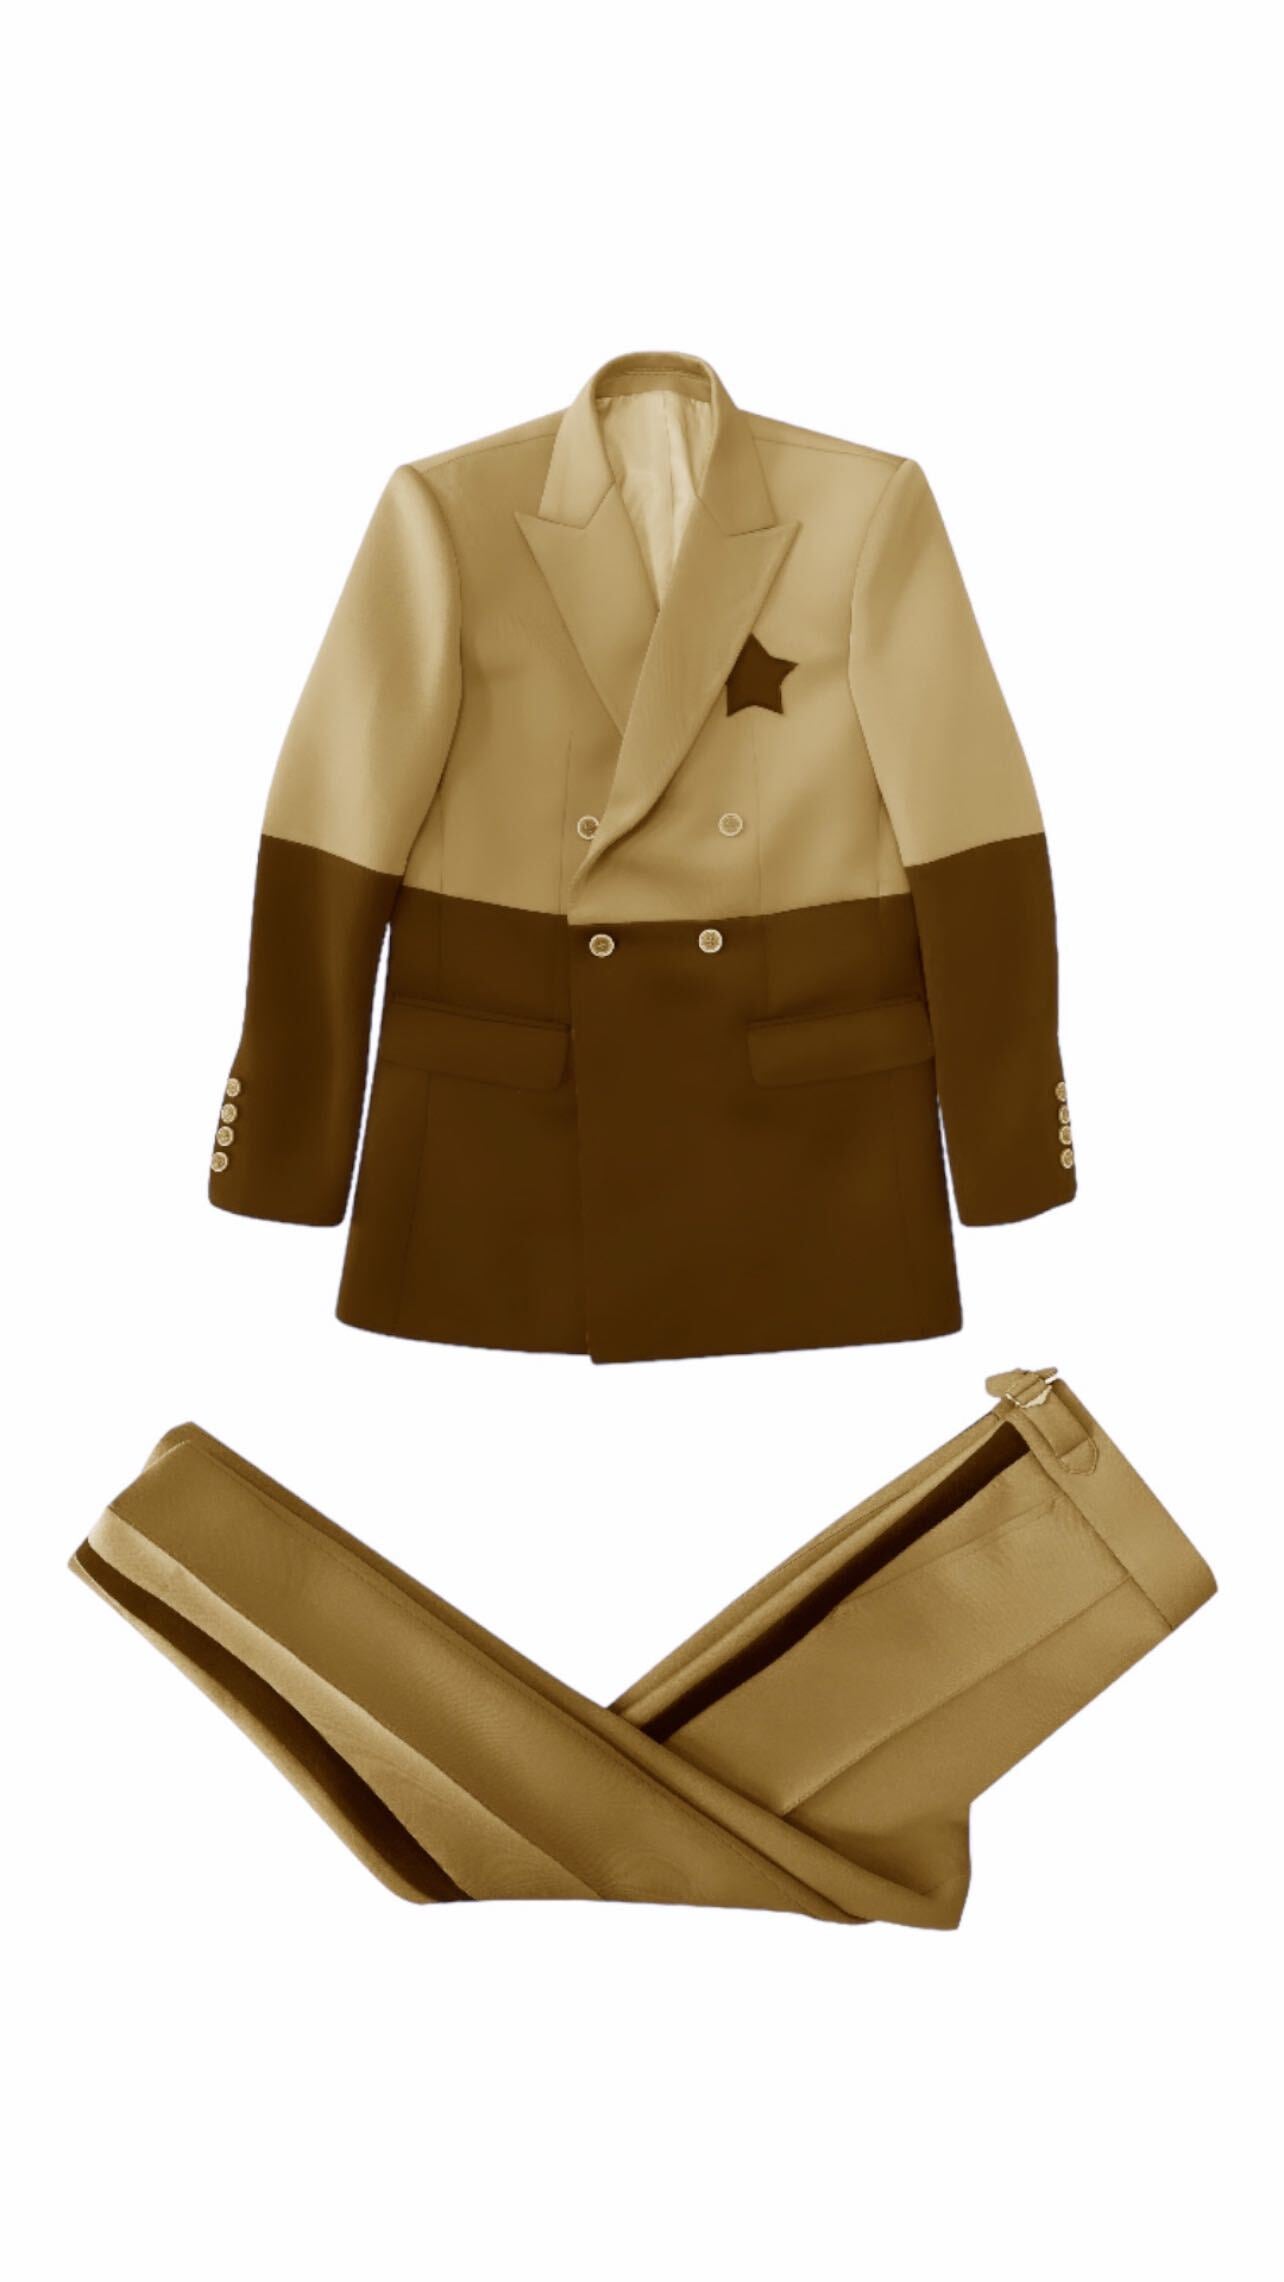 Starstruck Suit - Beige/Brown